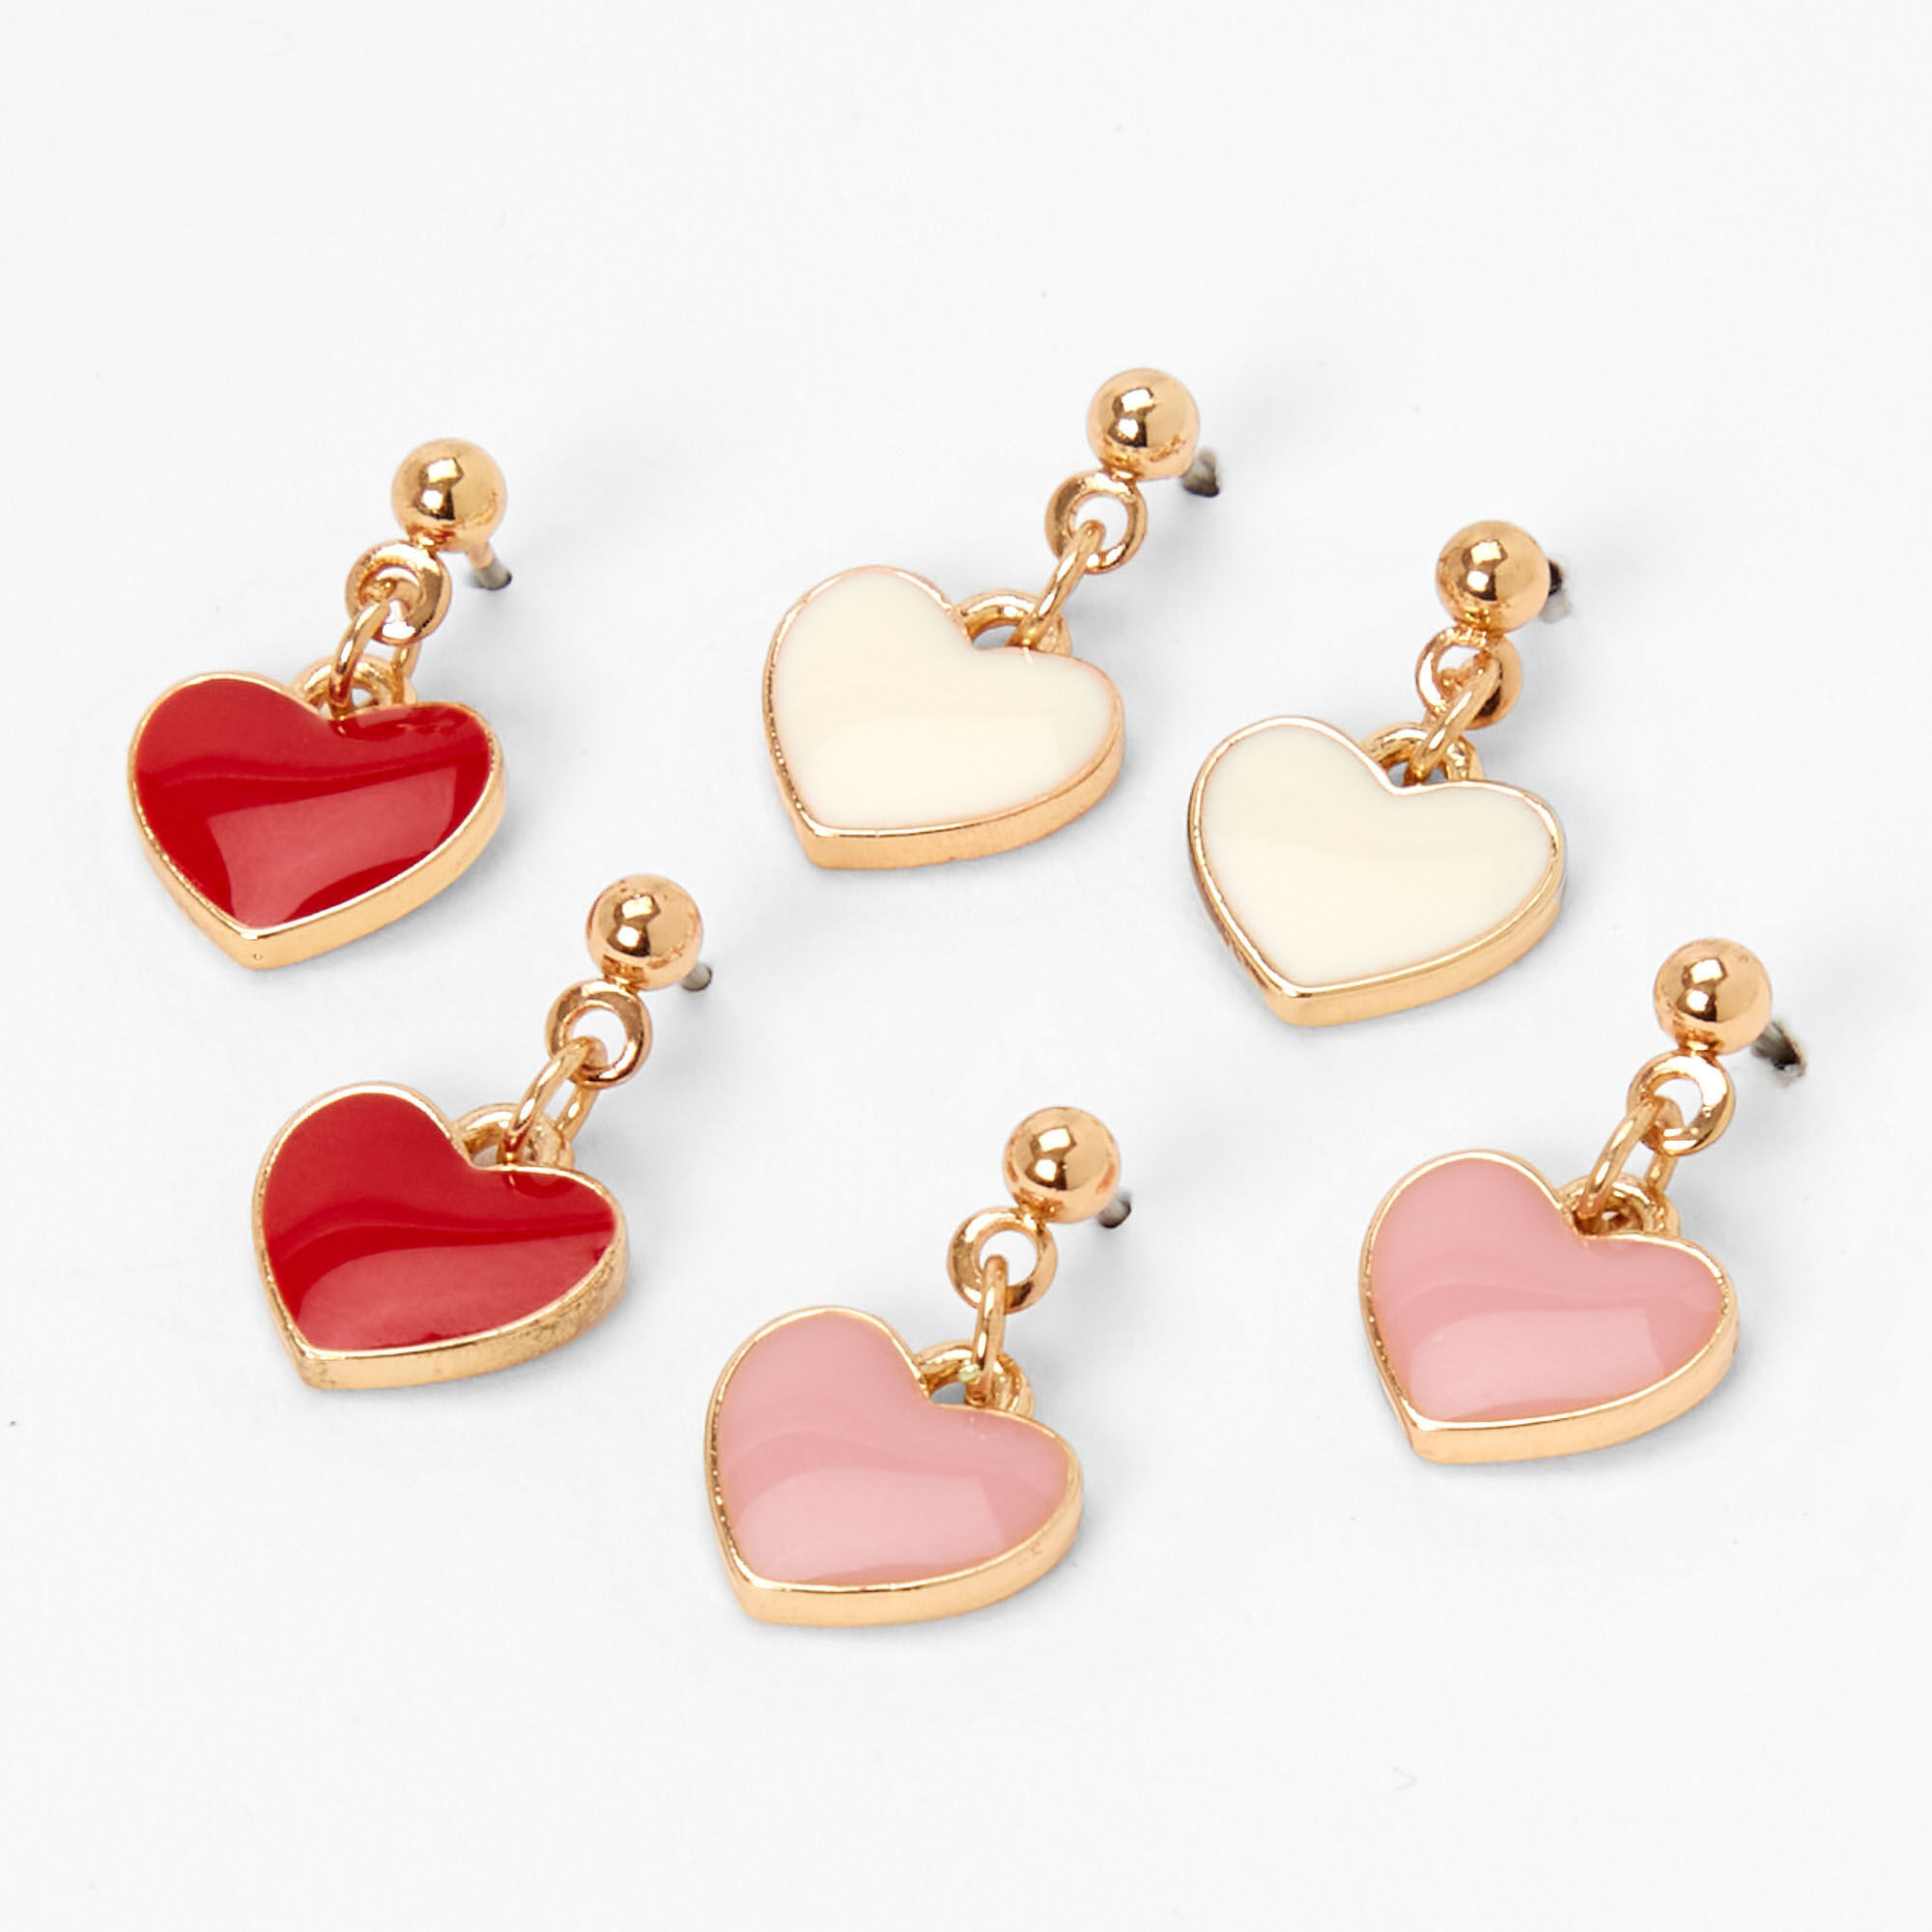 Tenderhearted Twinkle - Red Rhinestone Heart Earrings - Chic Jewelry B